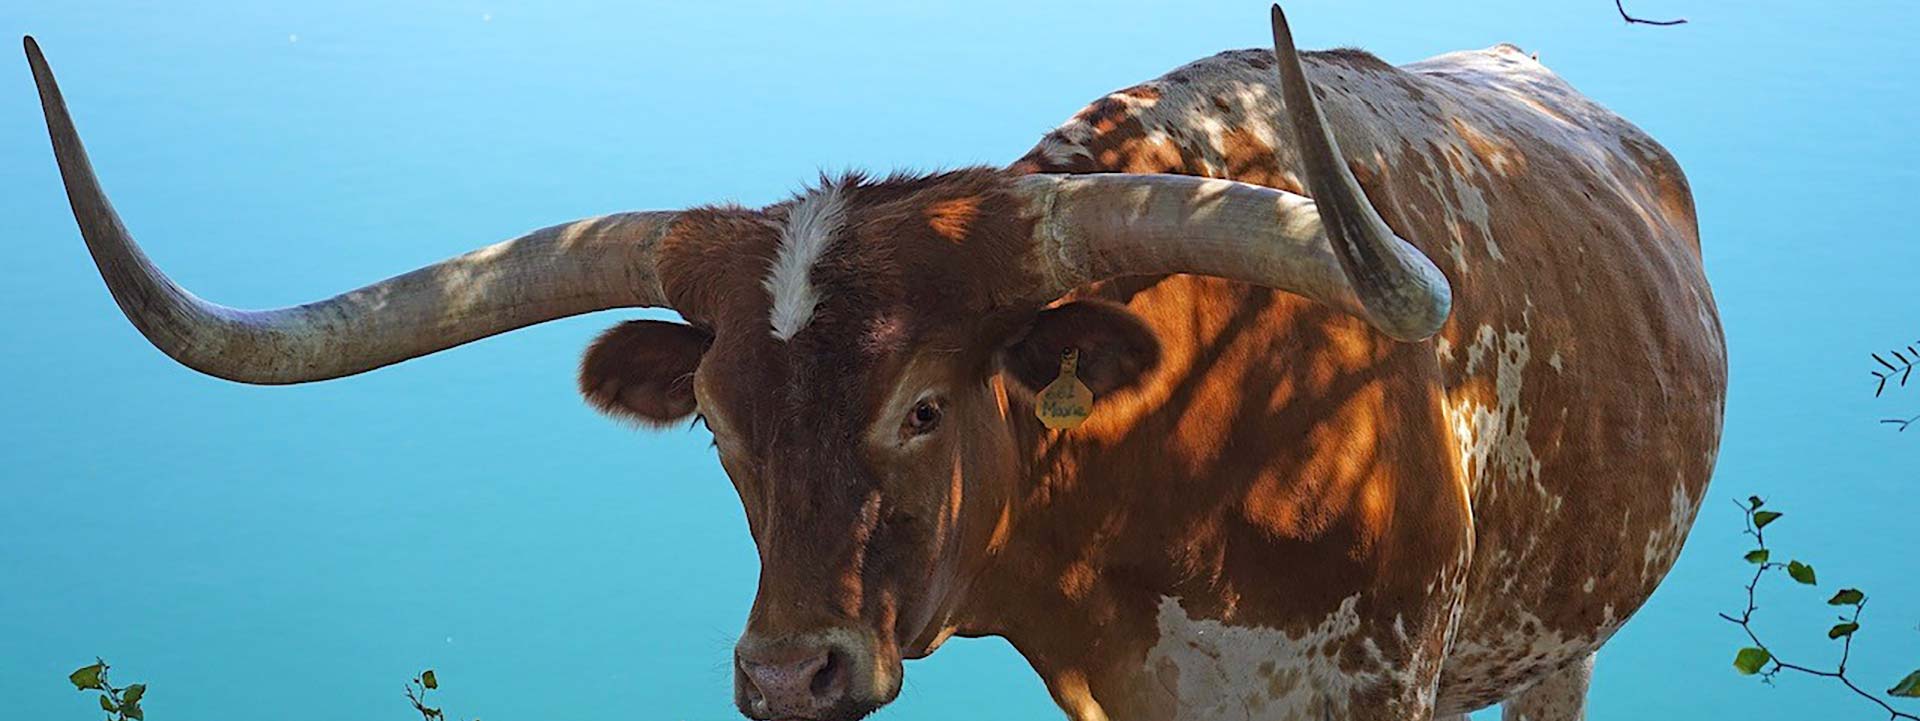 Longhorn Steers for sale in a Texas field